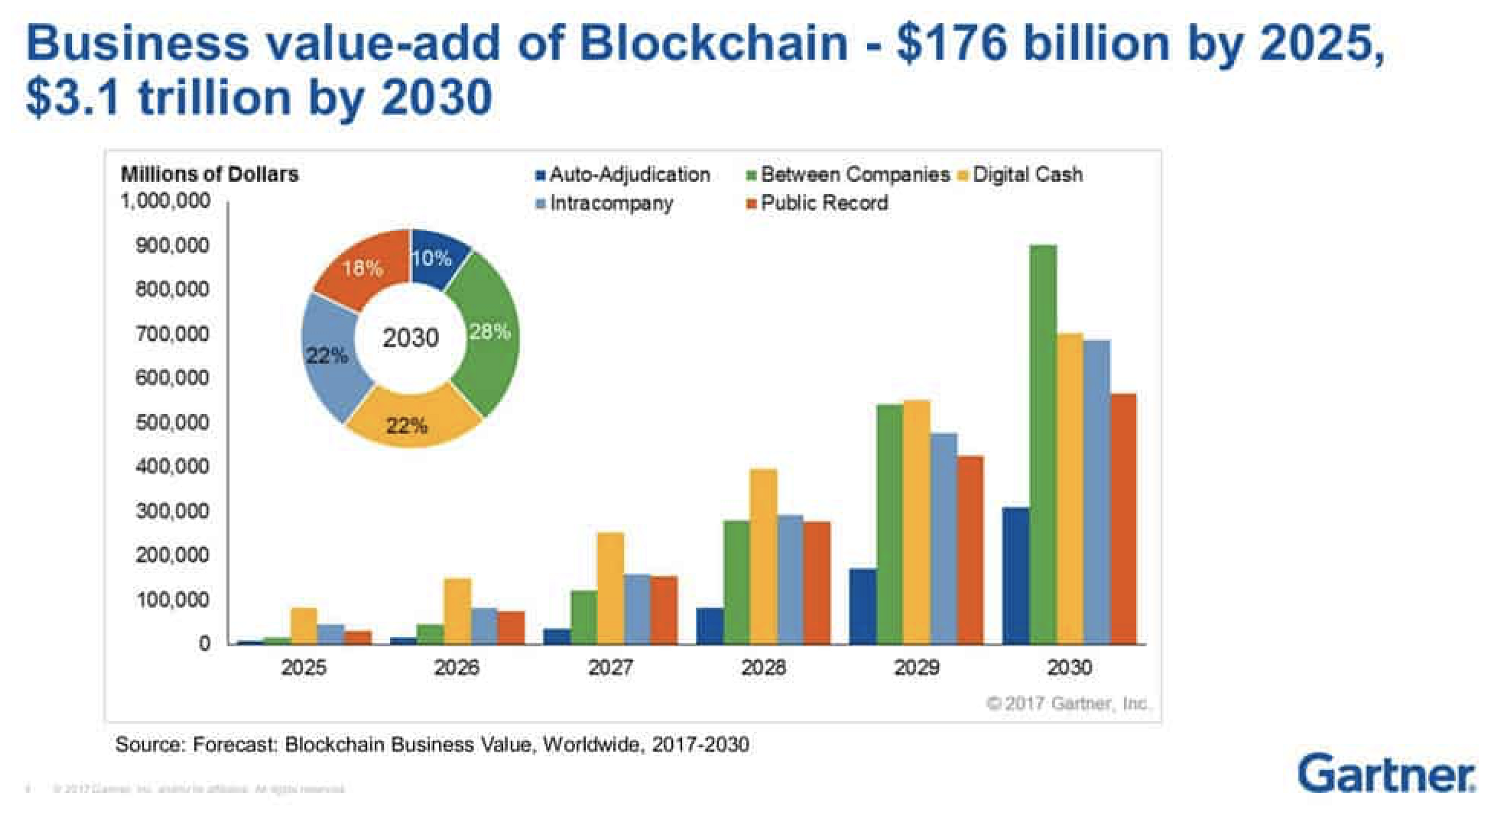 Business value add of Blockchain by Gartner